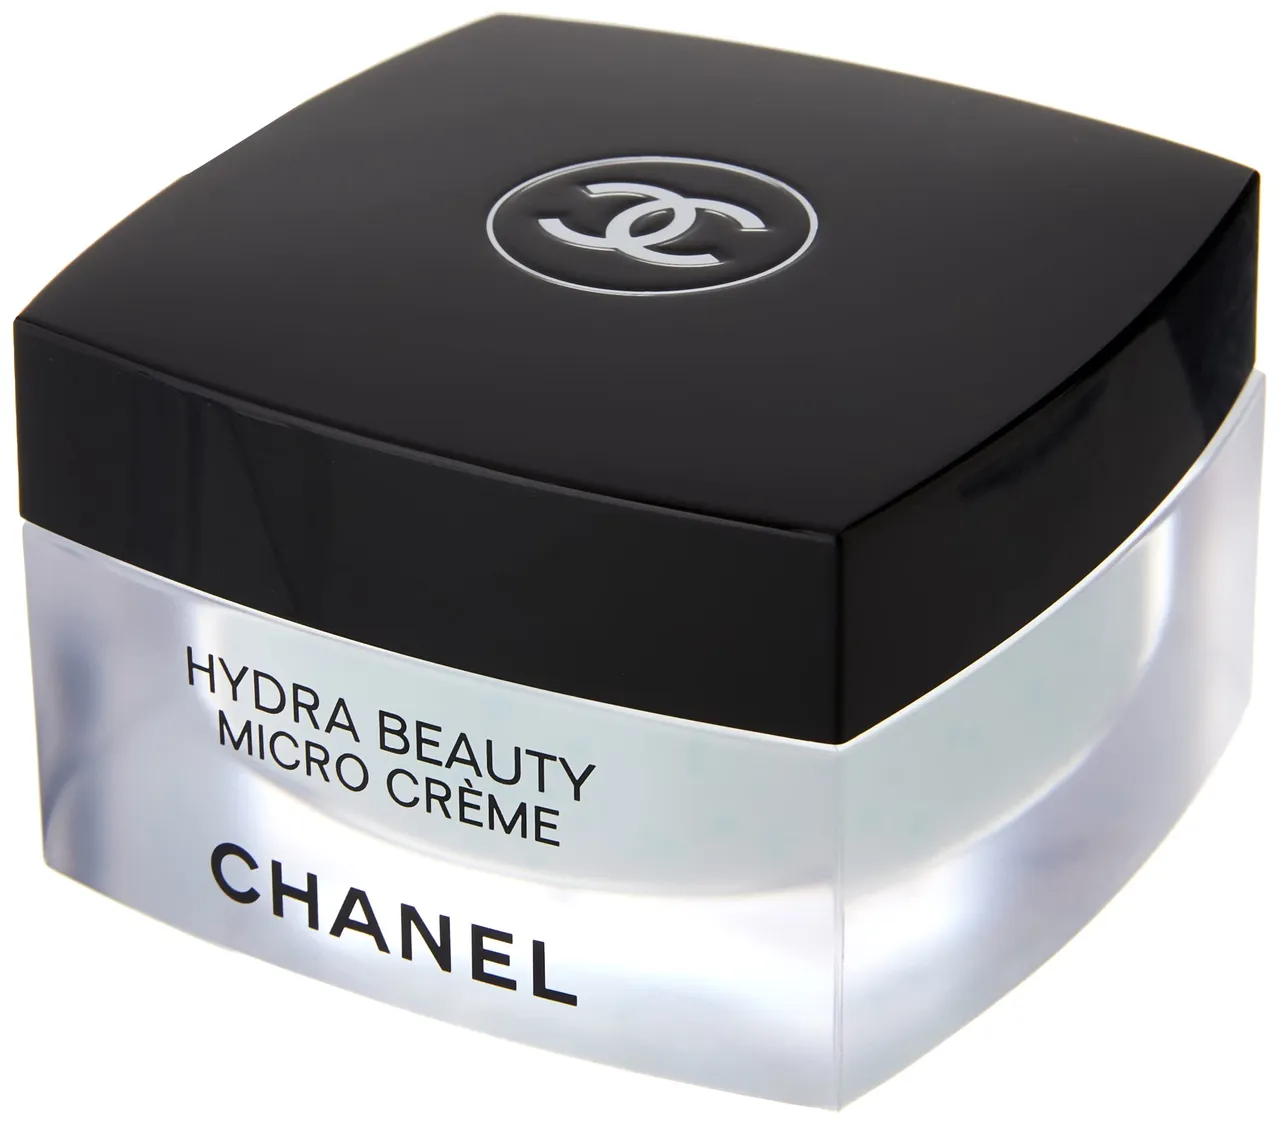 Chanel HYDRA BEAUTY micro crÃme 50 gr